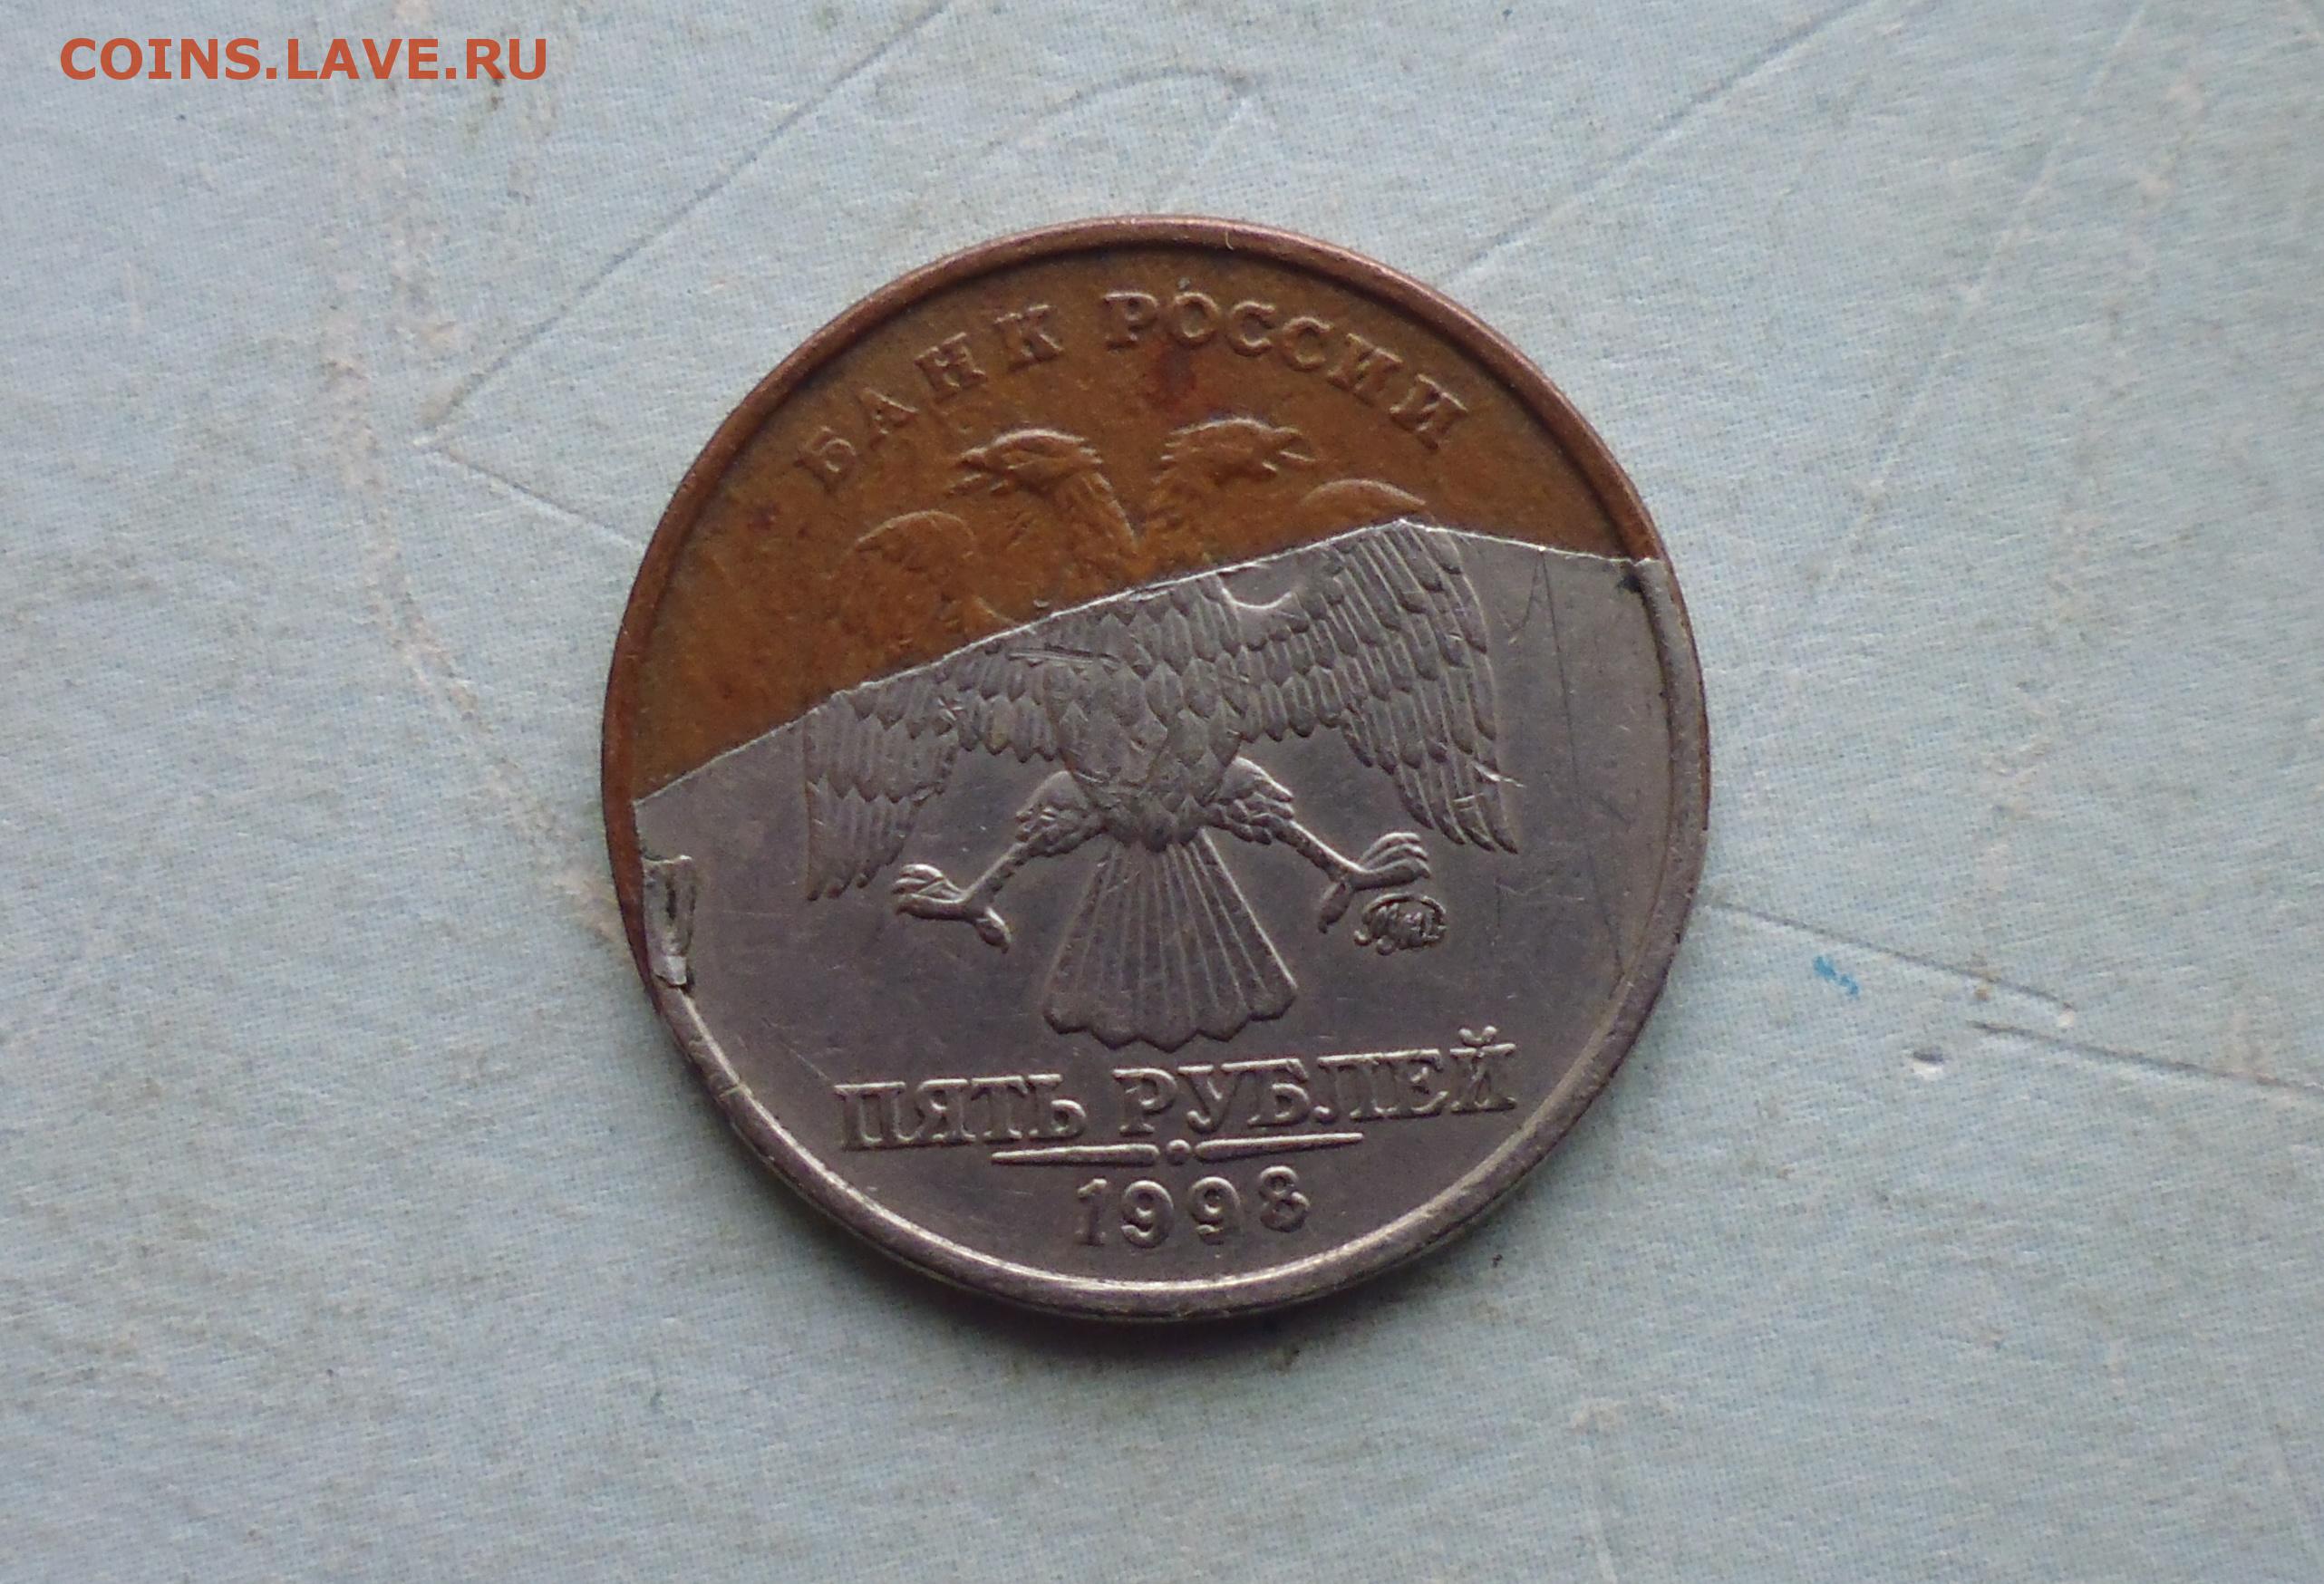 5 рублей 98 года. Монета 5 рублей 1998 года. Монета 5 рублей 1998 года ММД. Медная 5 рублевая монета 1998 года. Монеты СПМД 1998 год 5 рублей.